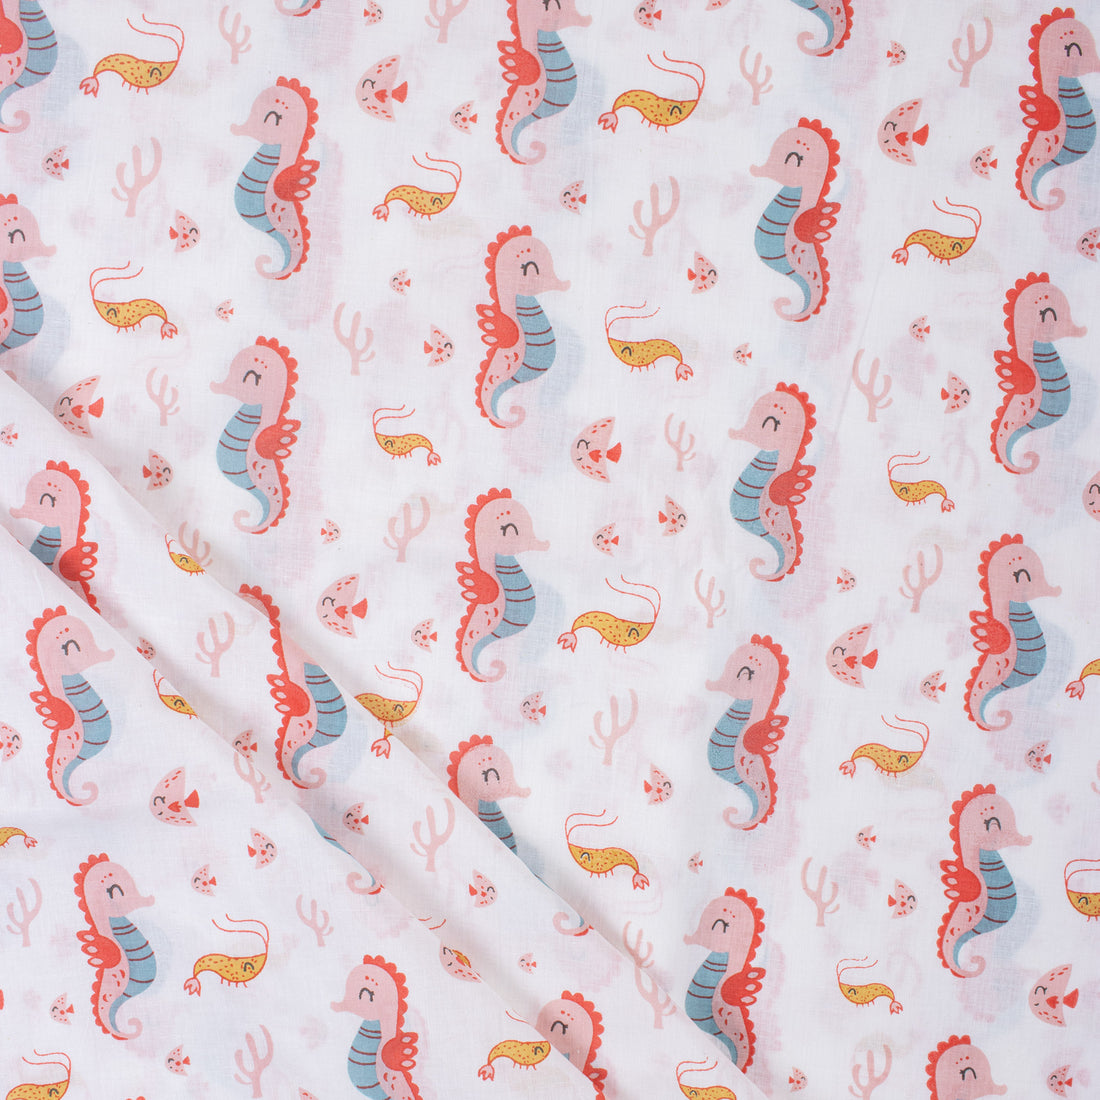 Seahorse Print High-Quality Fabric